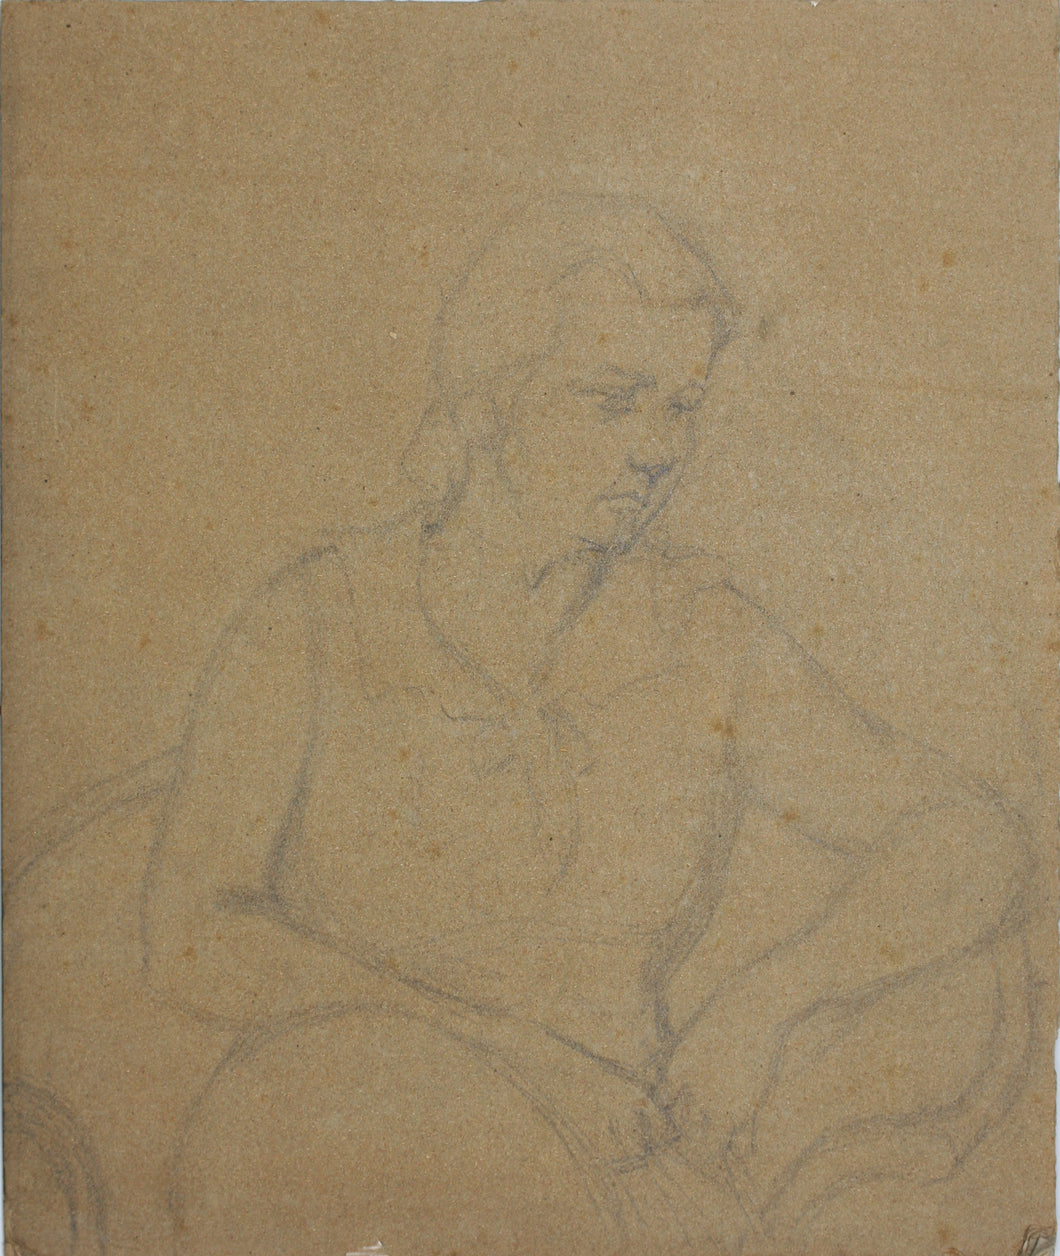 American realism. Female portrait. Graphite drawing. XX C.